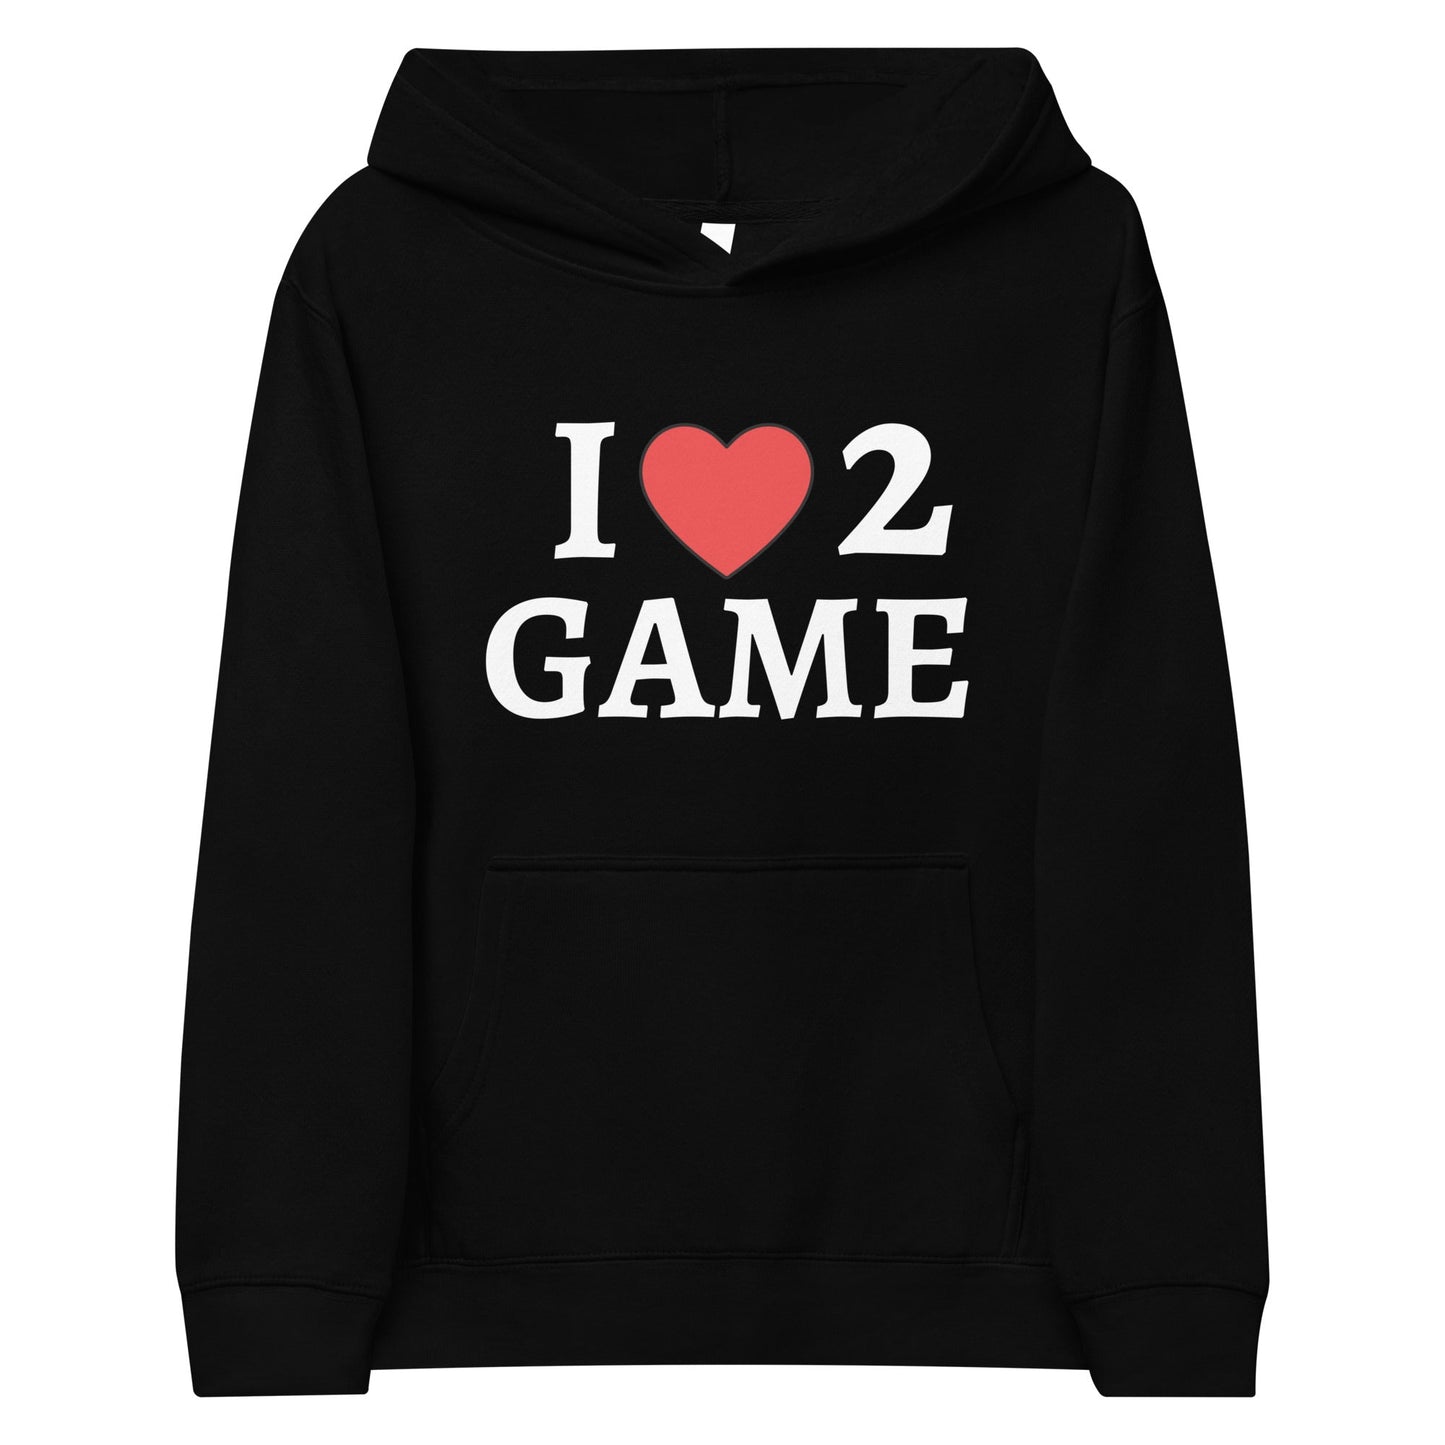 I HEART 2 GAME | Kids fleece hoodie